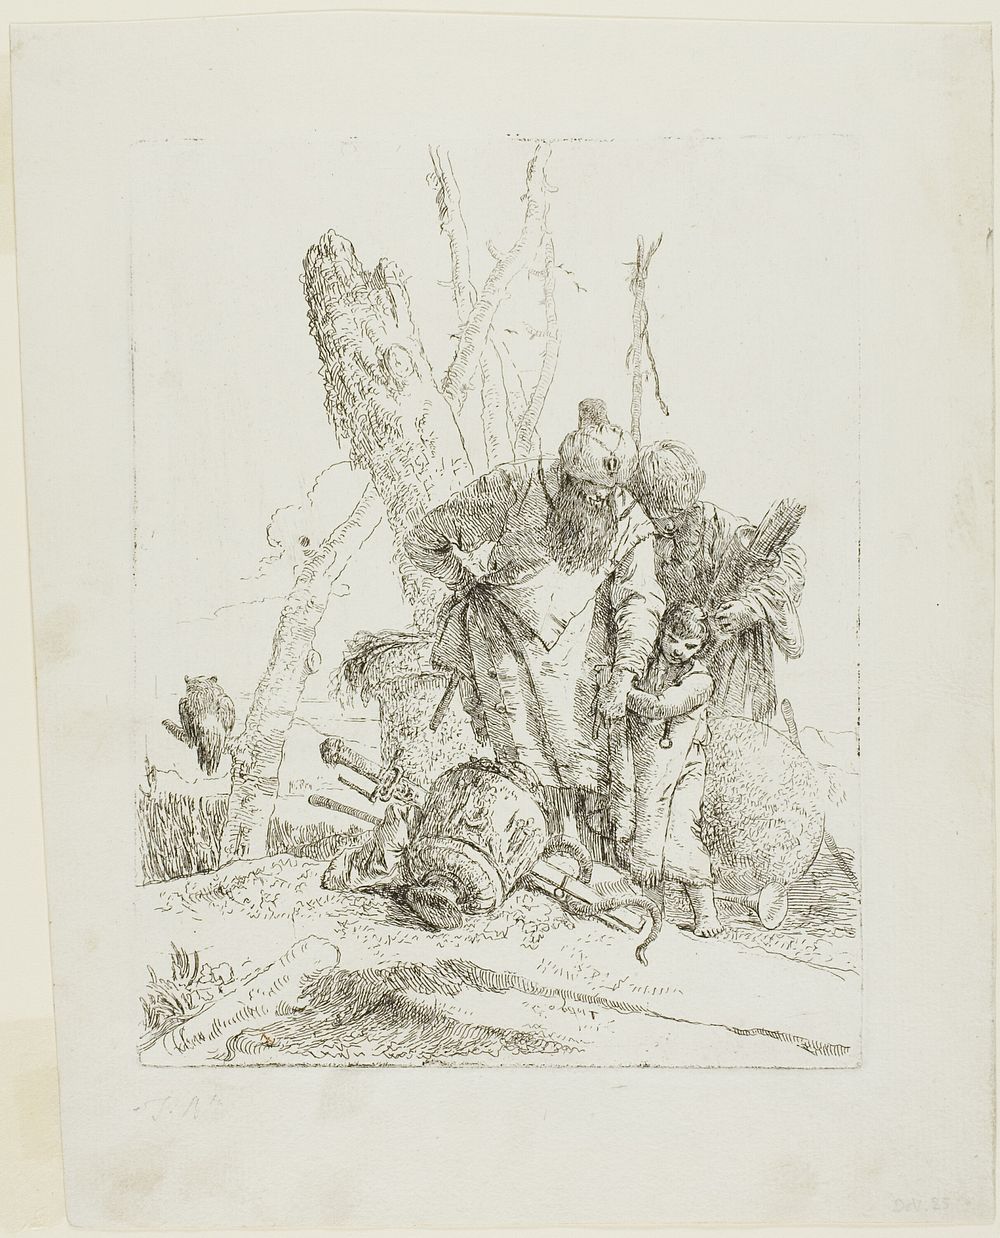 Two Astrologers and a Boy, from Scherzi by Giambattista Tiepolo